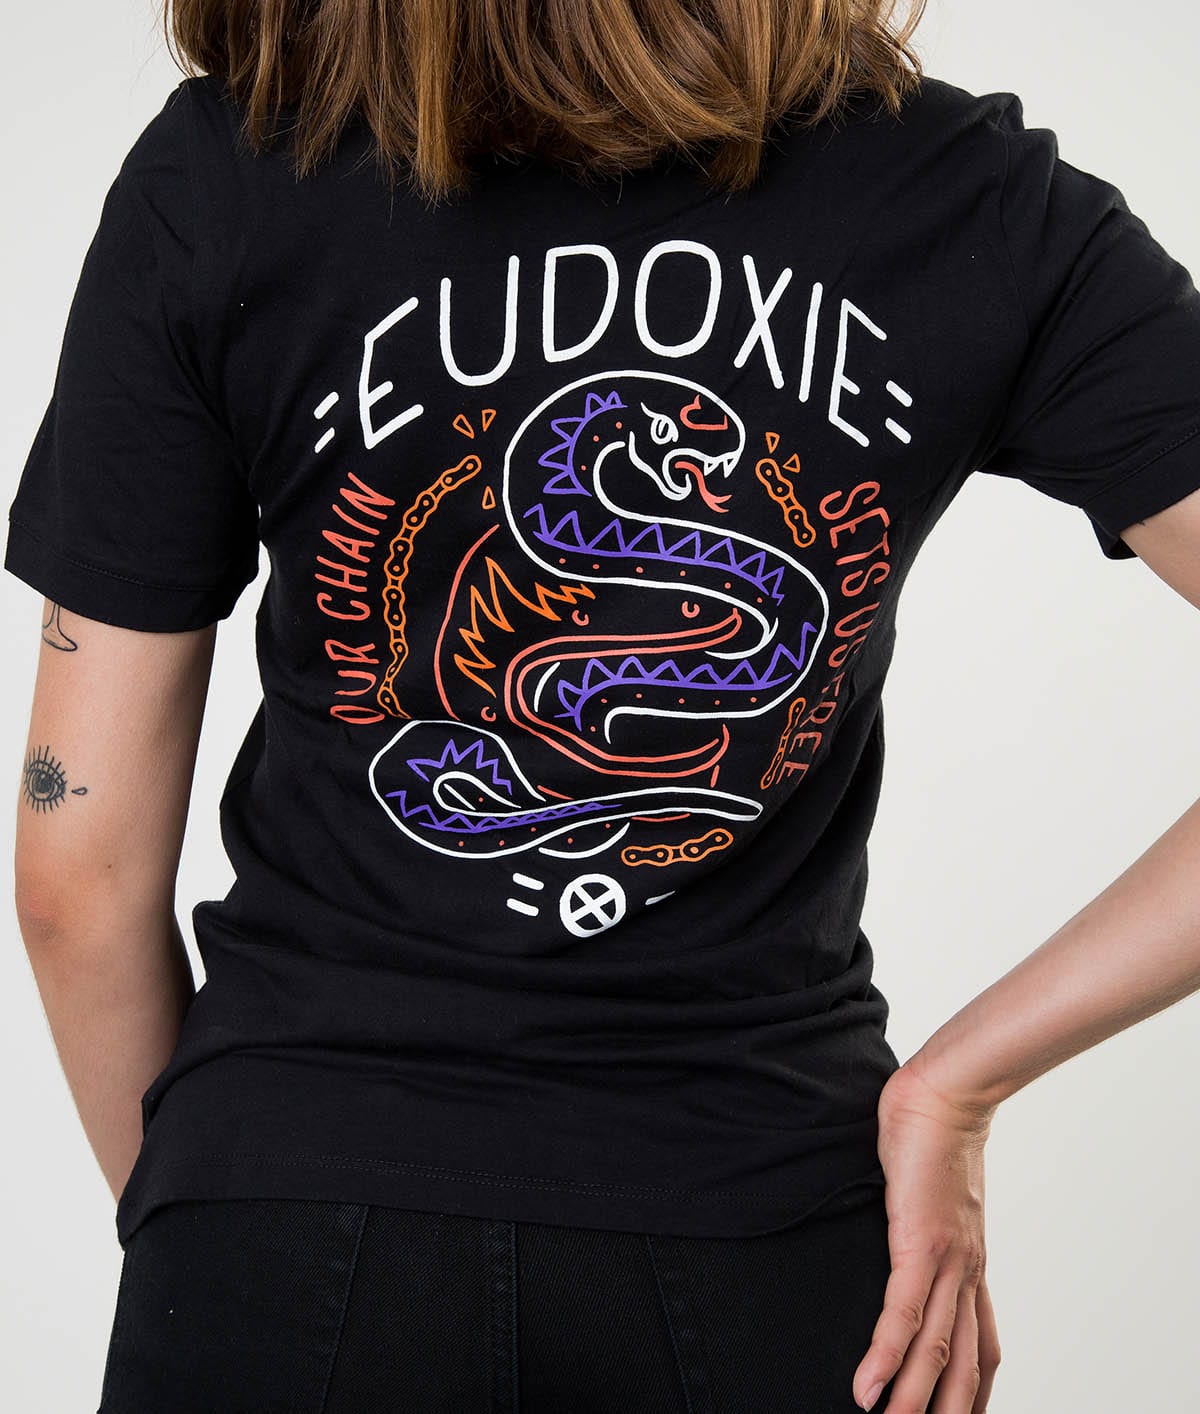 Eudoxie Black Masha T-Shirt - ExtraLarge - Bild 4